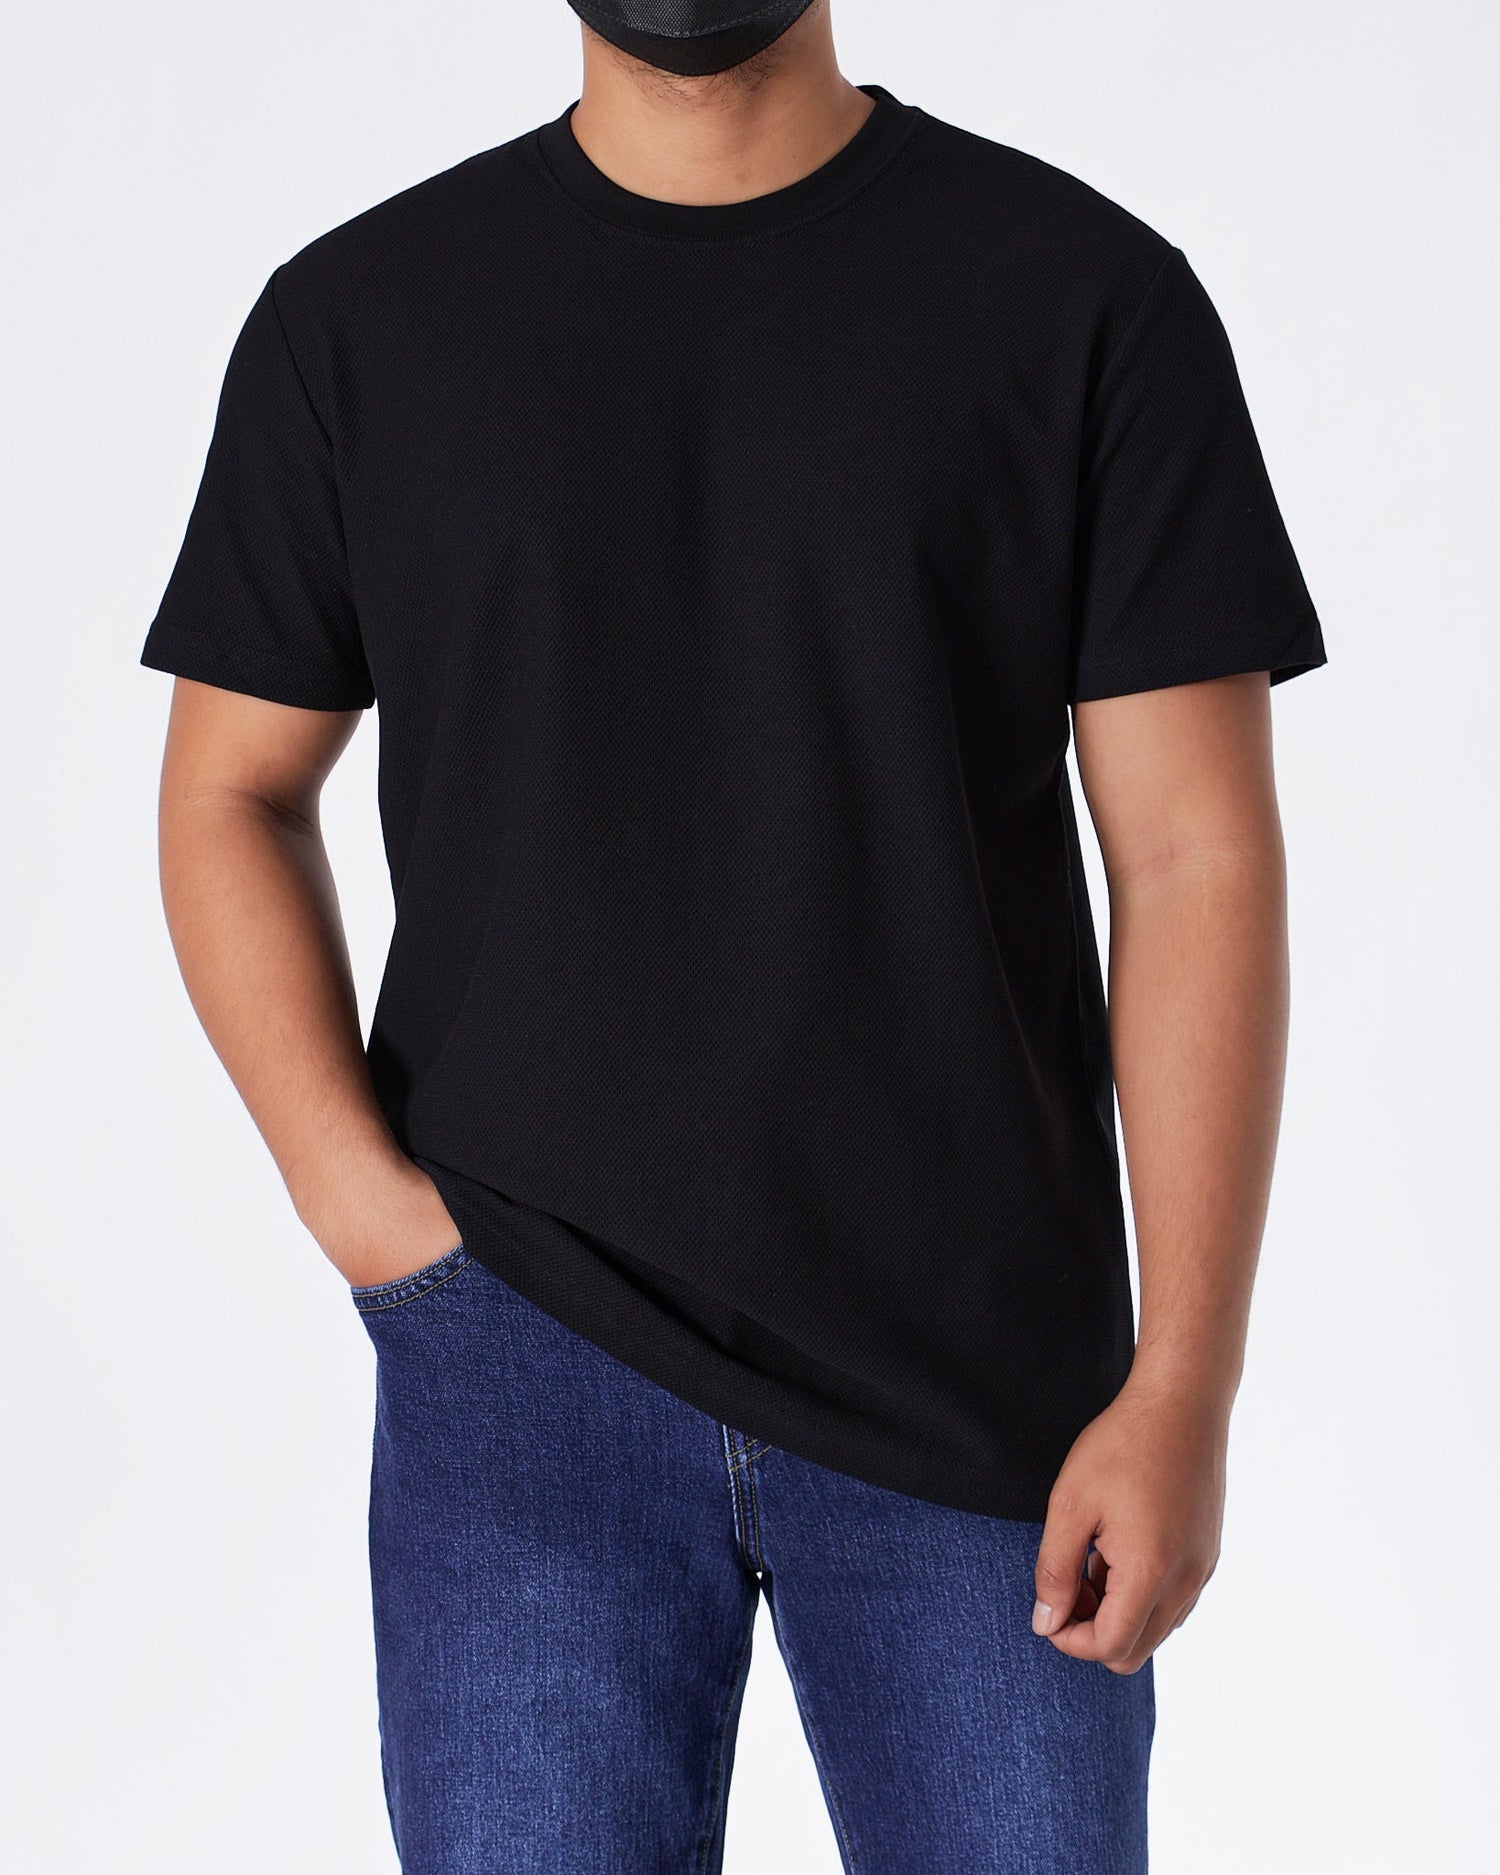 MOI OUTFIT-ABA Solid Color Comfort Men Black T-Shirt 14.90